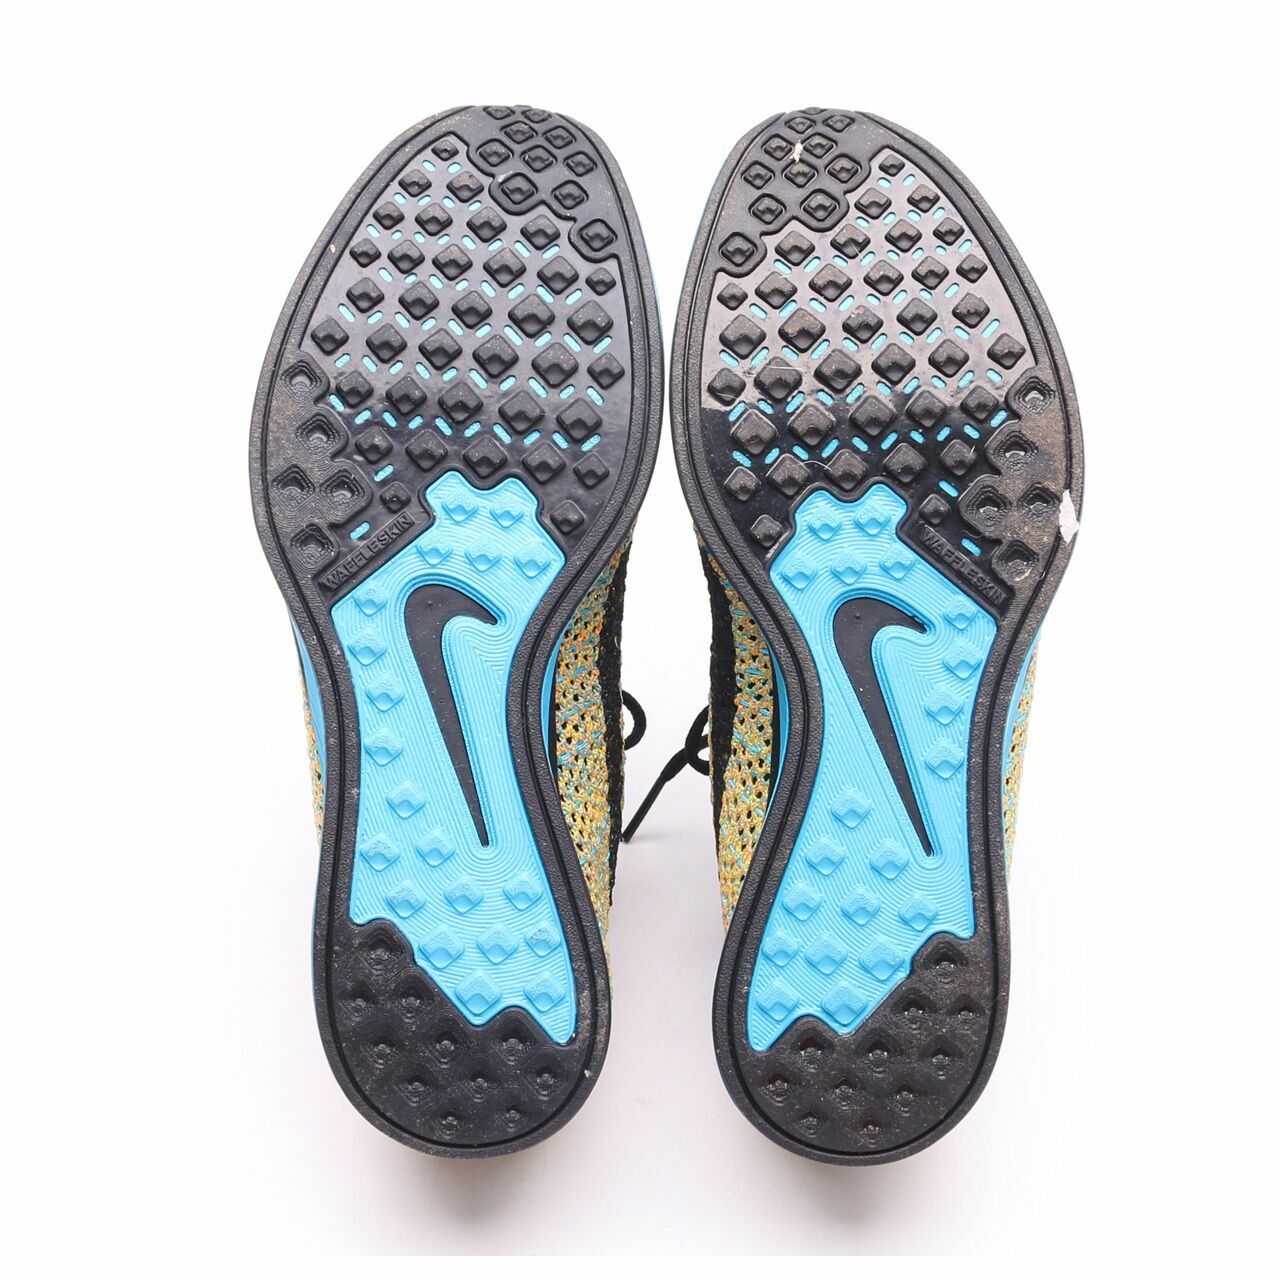 Nike Flyknit Racer Bright Citrus – Blue Lagoon Sneakers